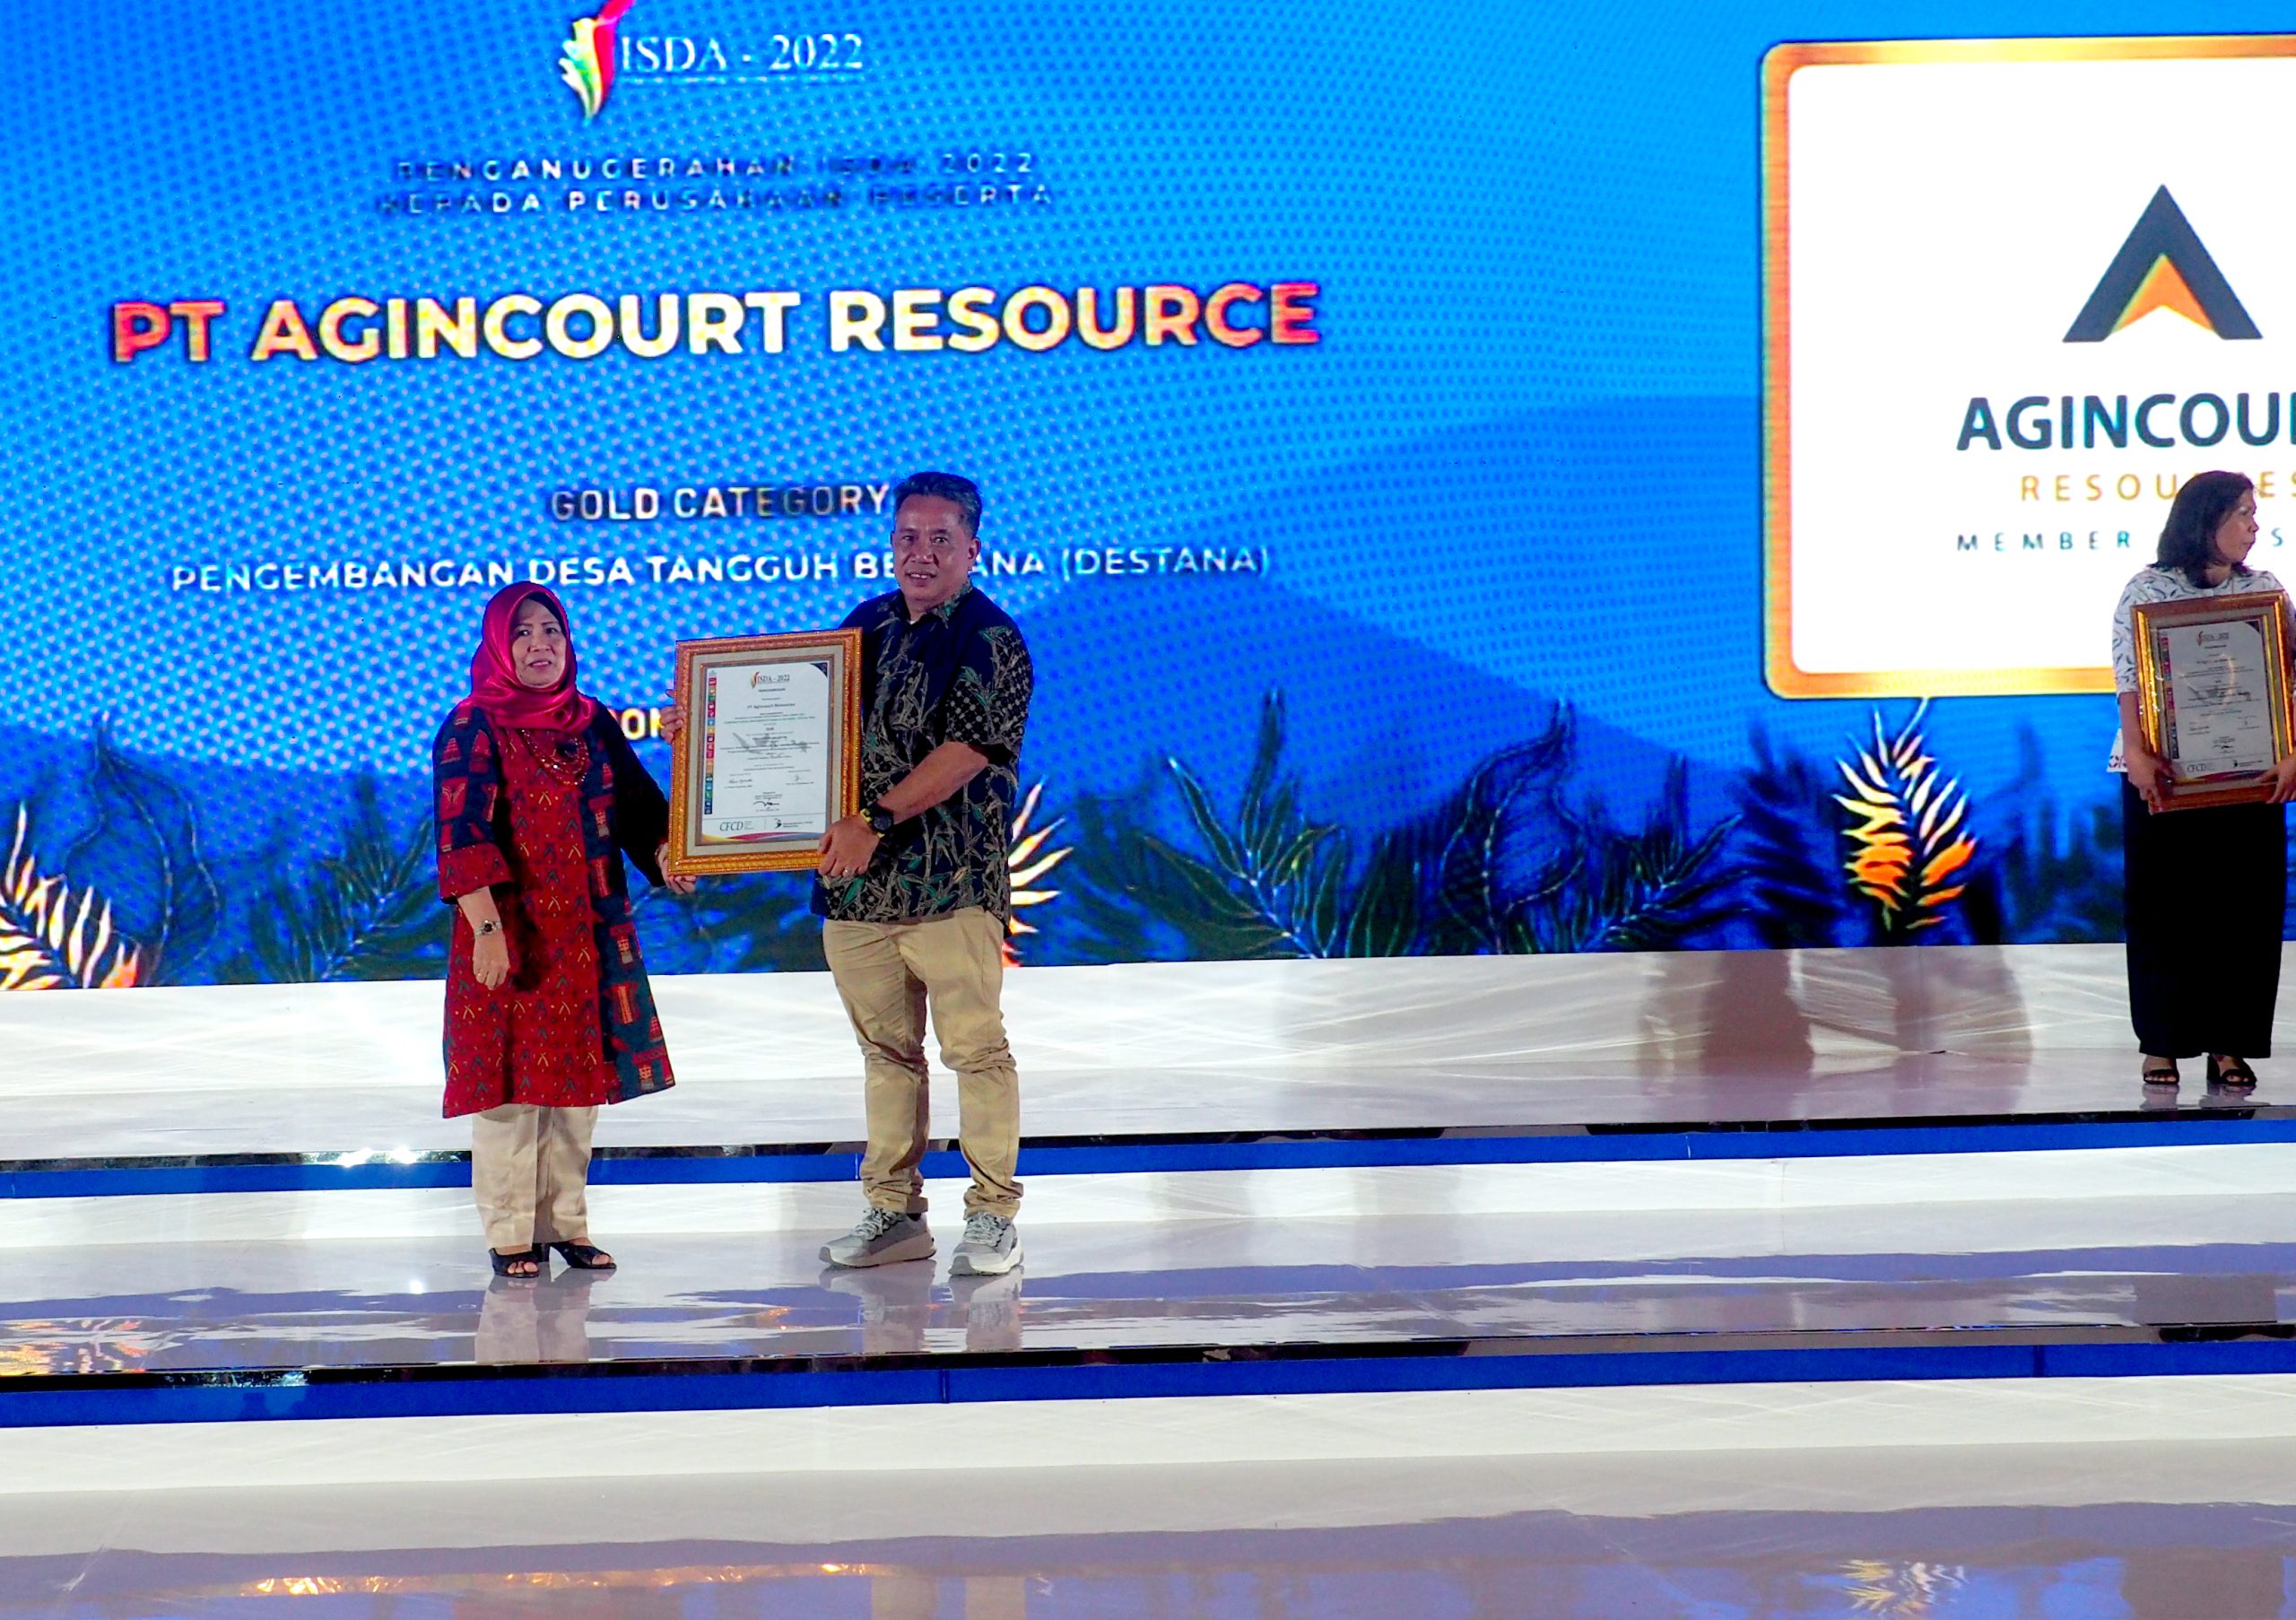 Penghargaan Emas Pengembangan Desa Tangguh Bencana (DESTANA) dalam Indonesian Sustainable Development Goals Award (ISDA) 2022